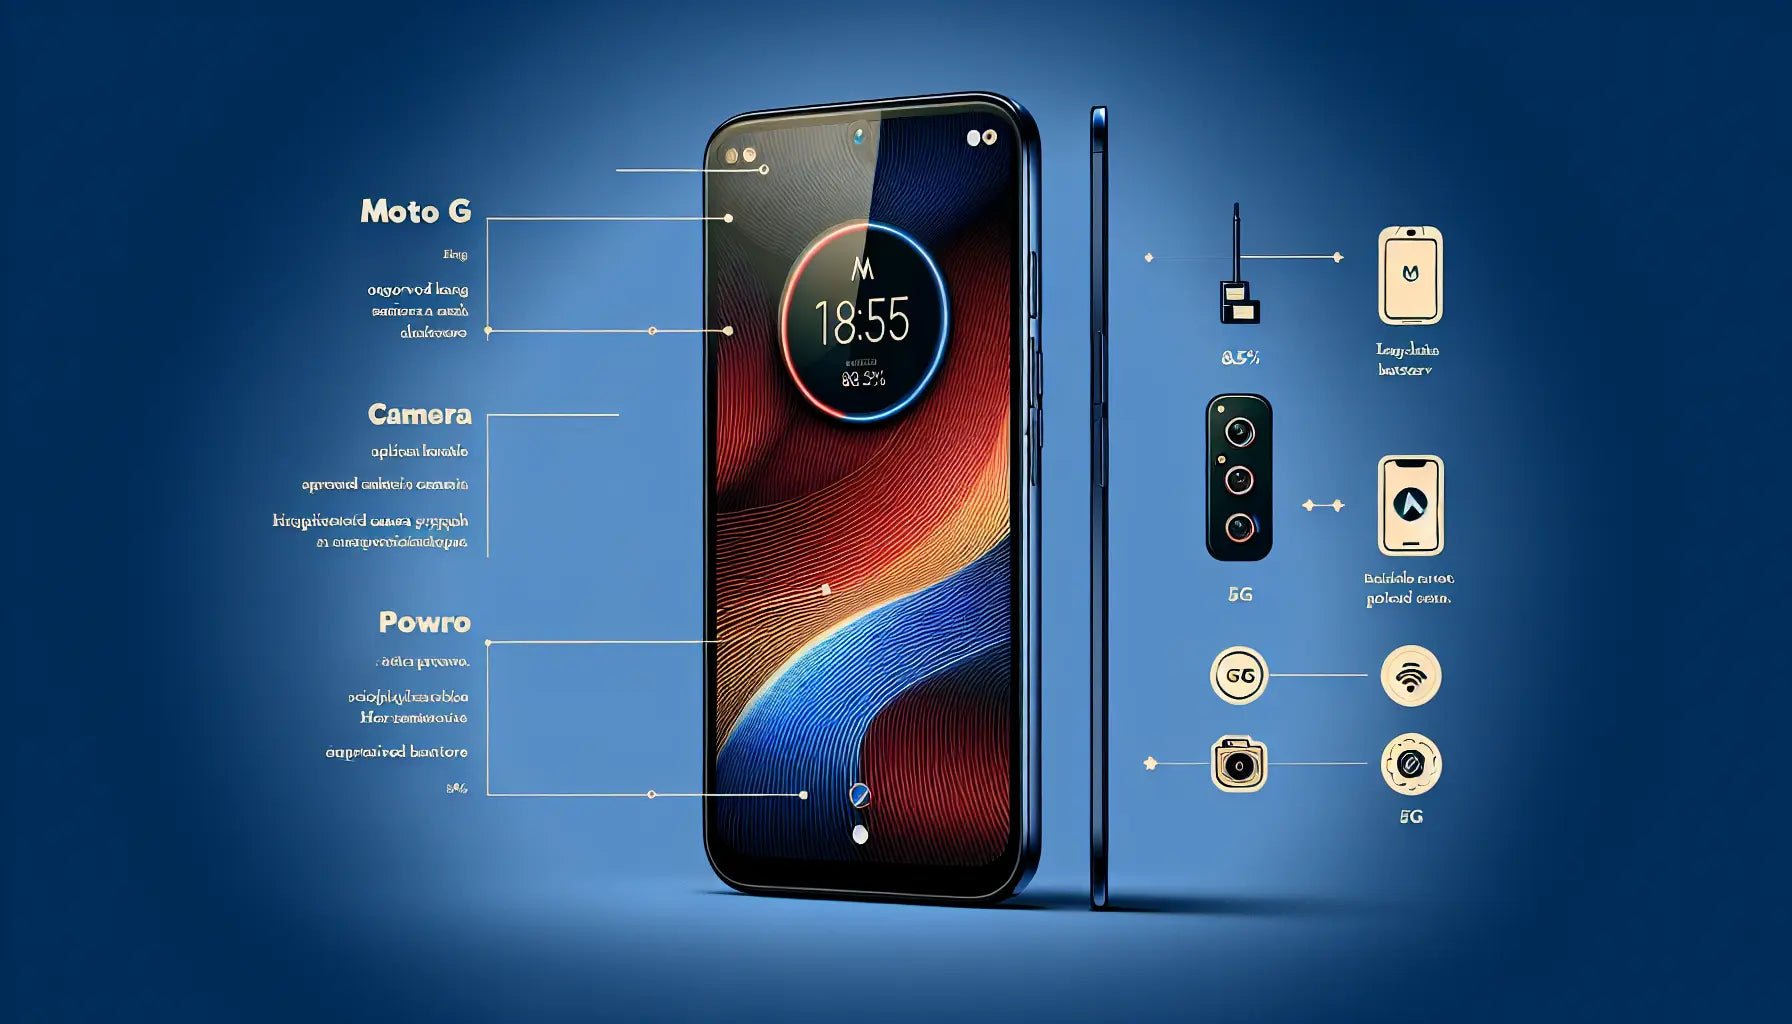 Moto G Power 5G (2024) arrives with better cameras, Moto G brings a SD 4 Gen 1 chipset